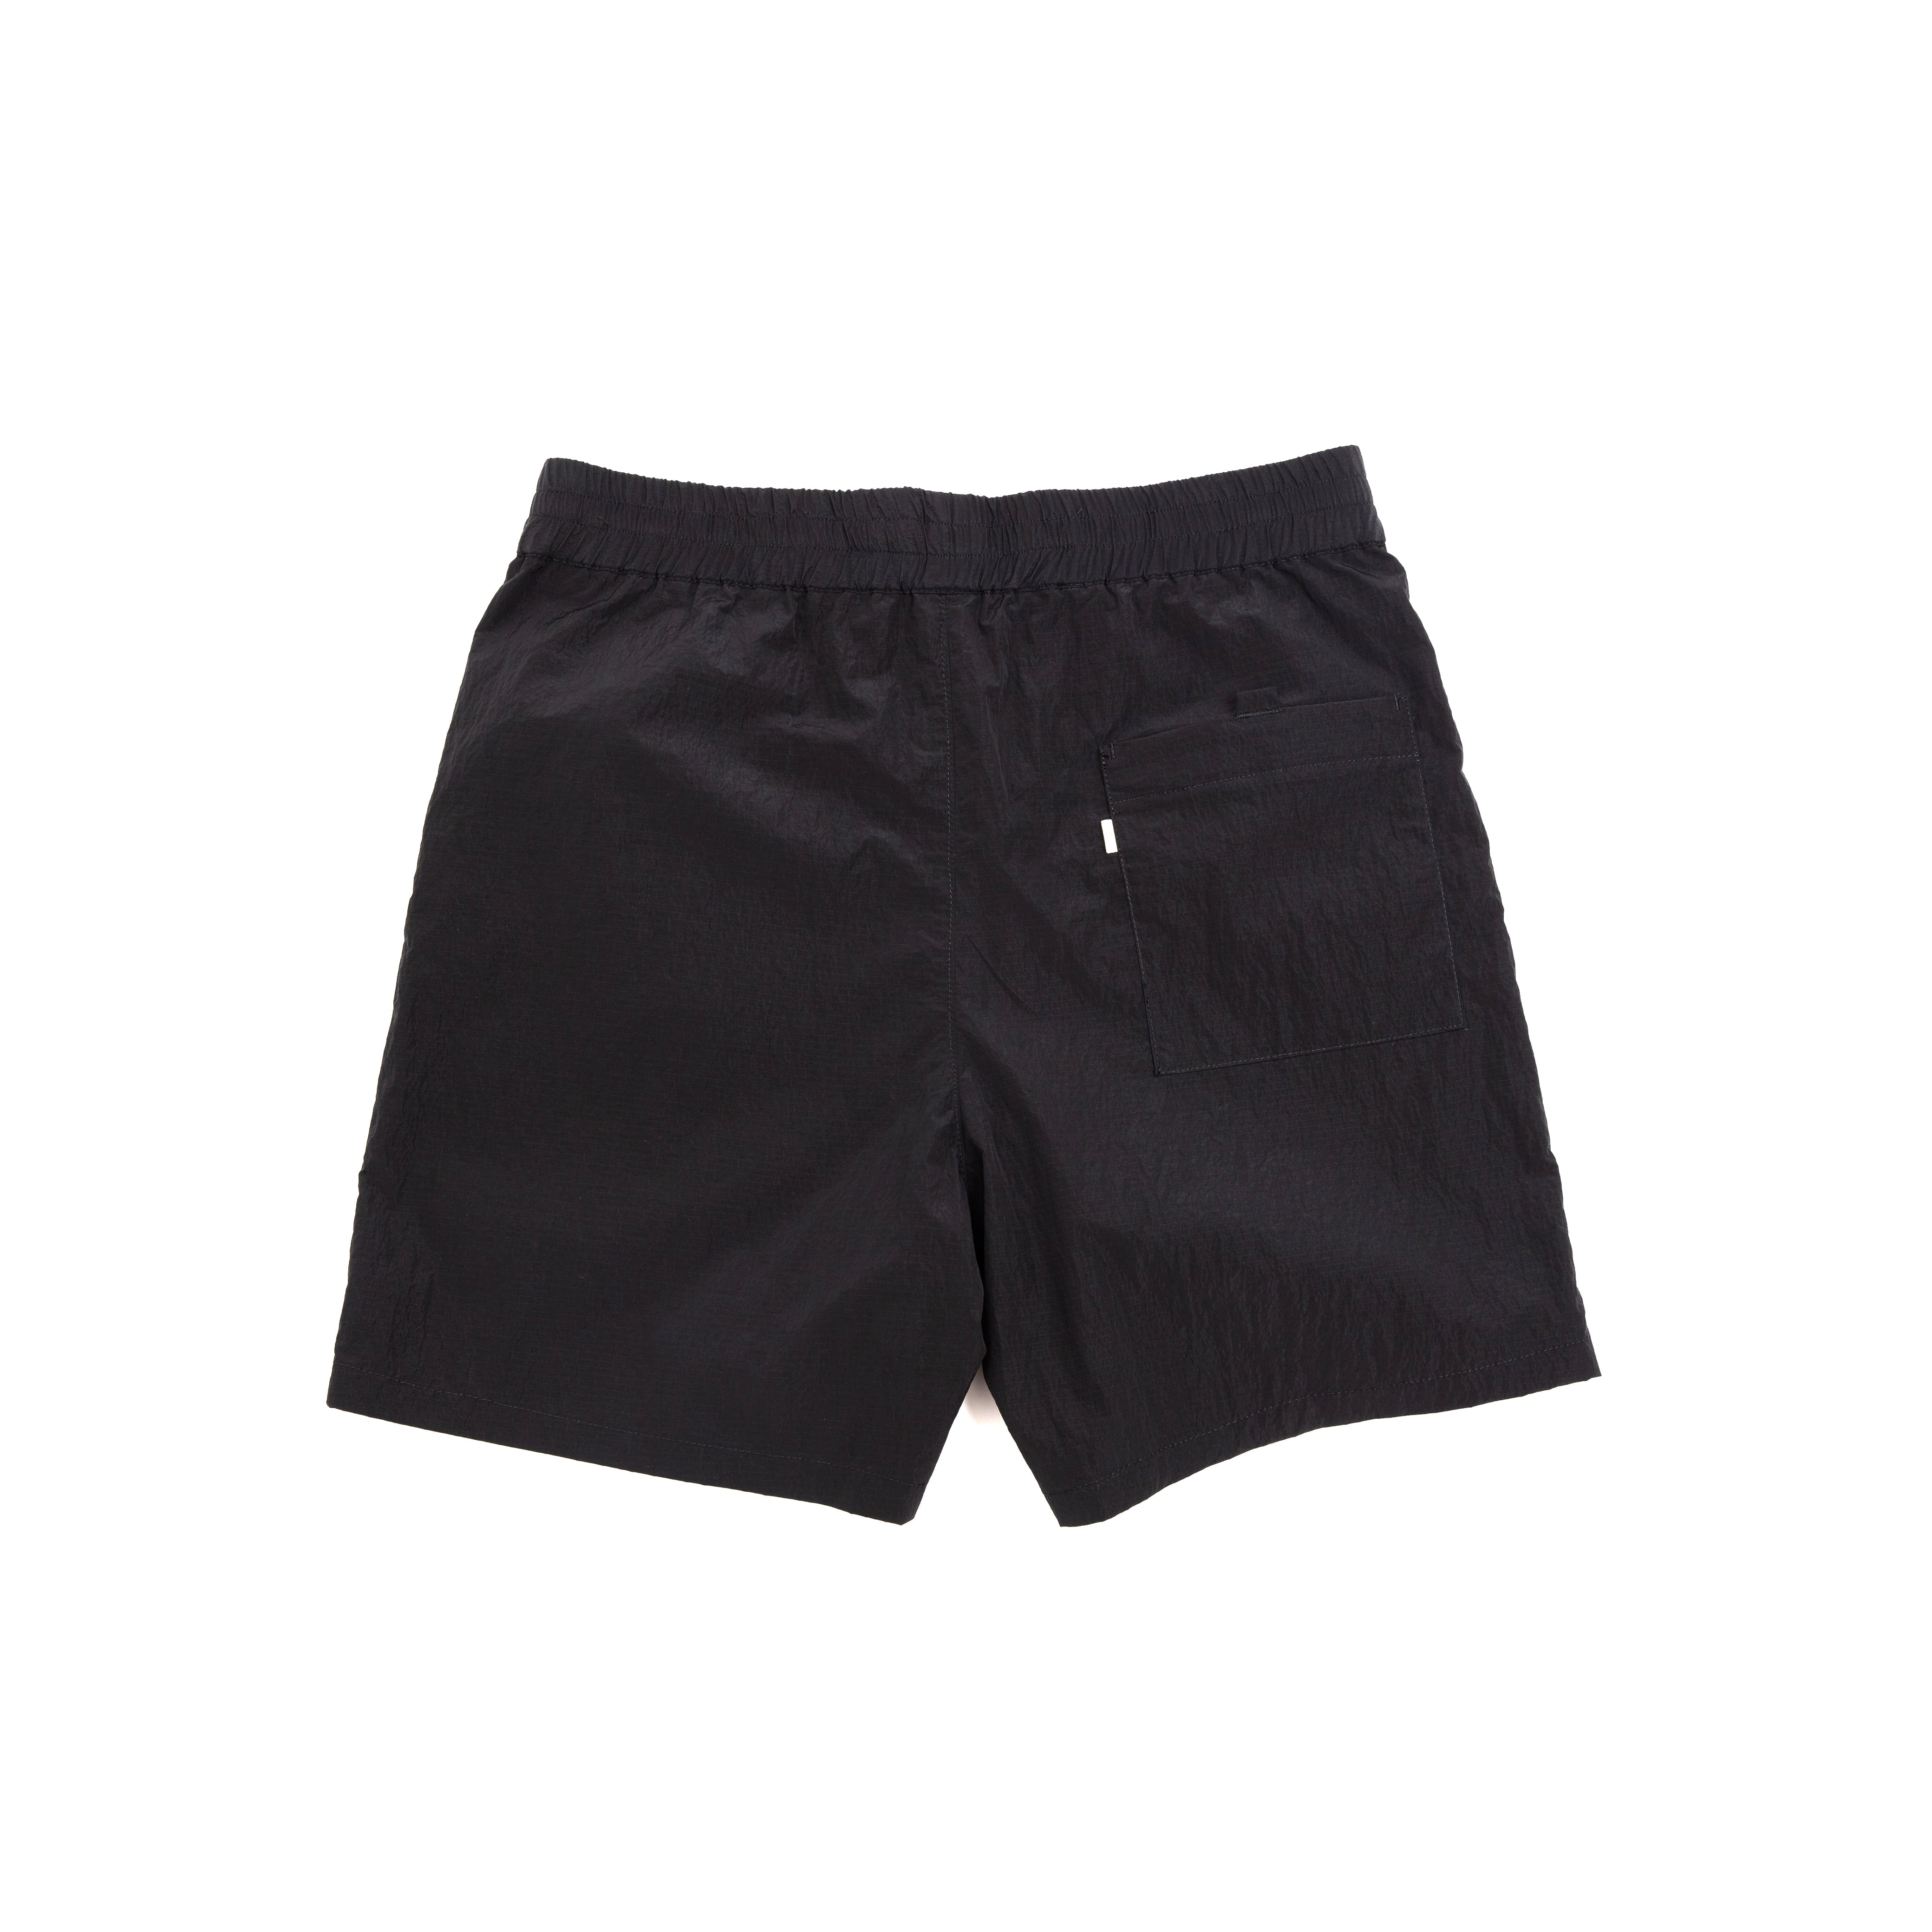 Ripstop Nylon Baggies Shorts (black)